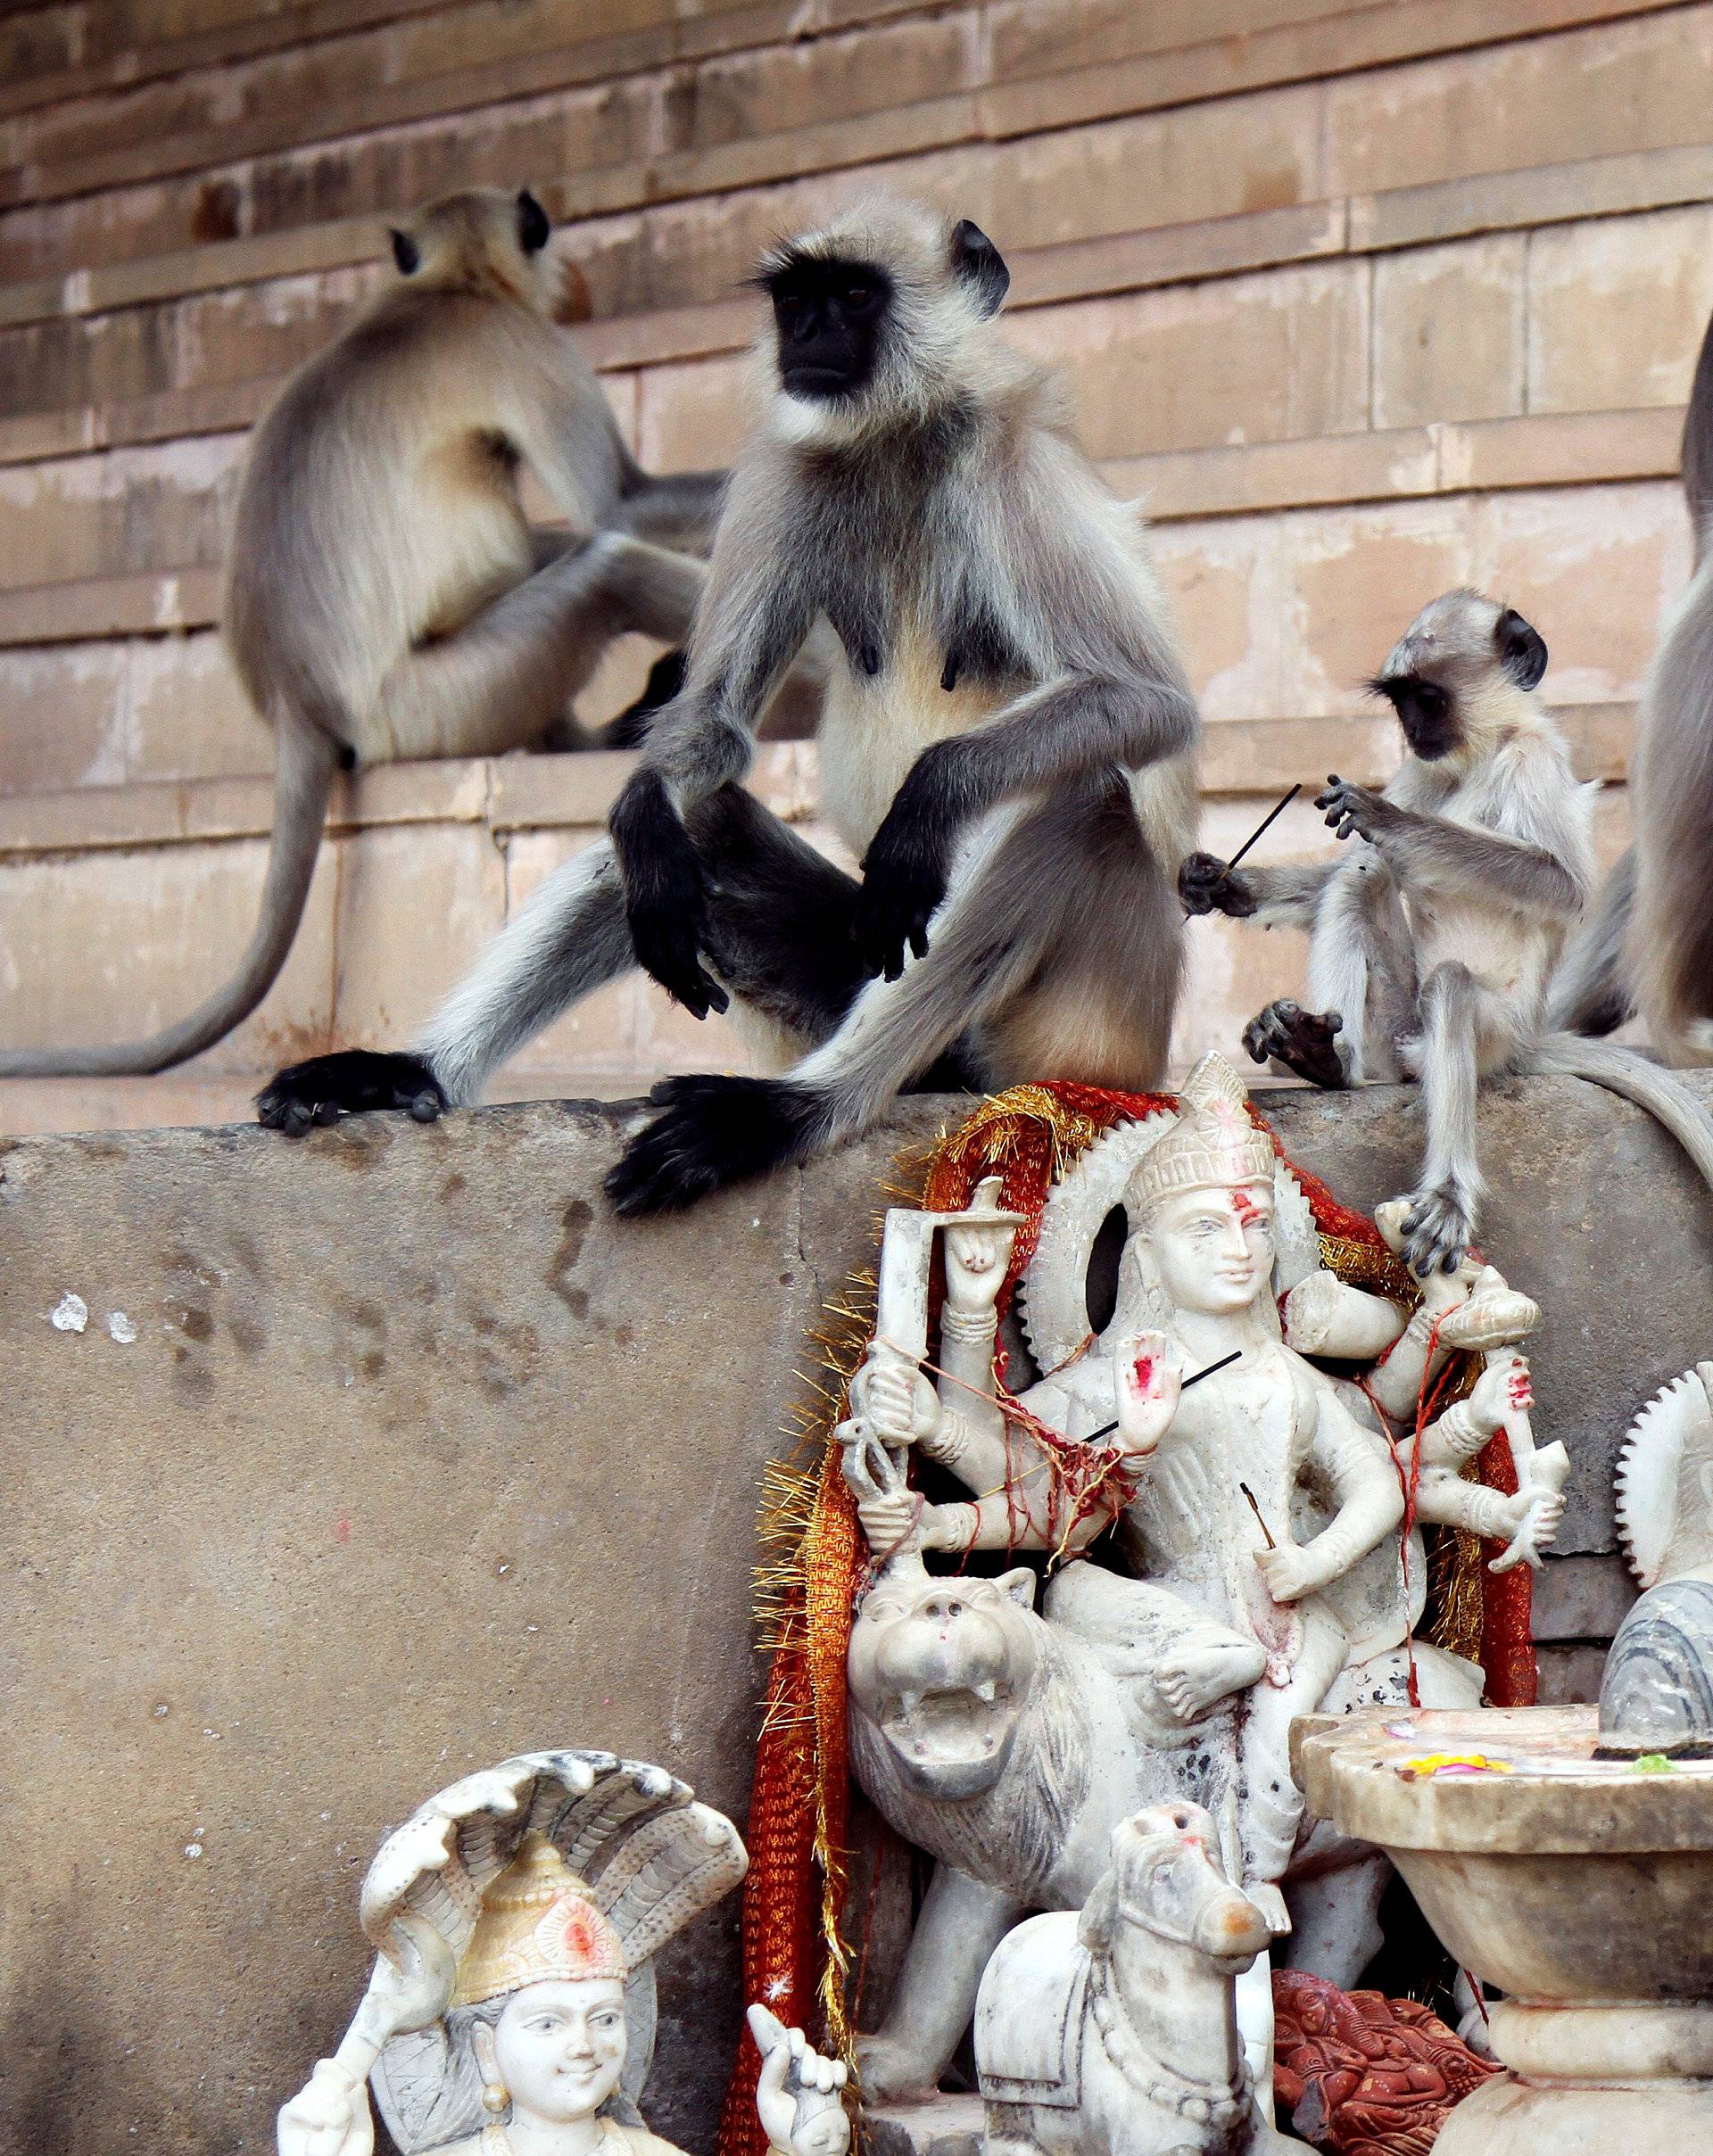 Langur monkeys play next to the idols of Hindu deities at a lake in Pushkar